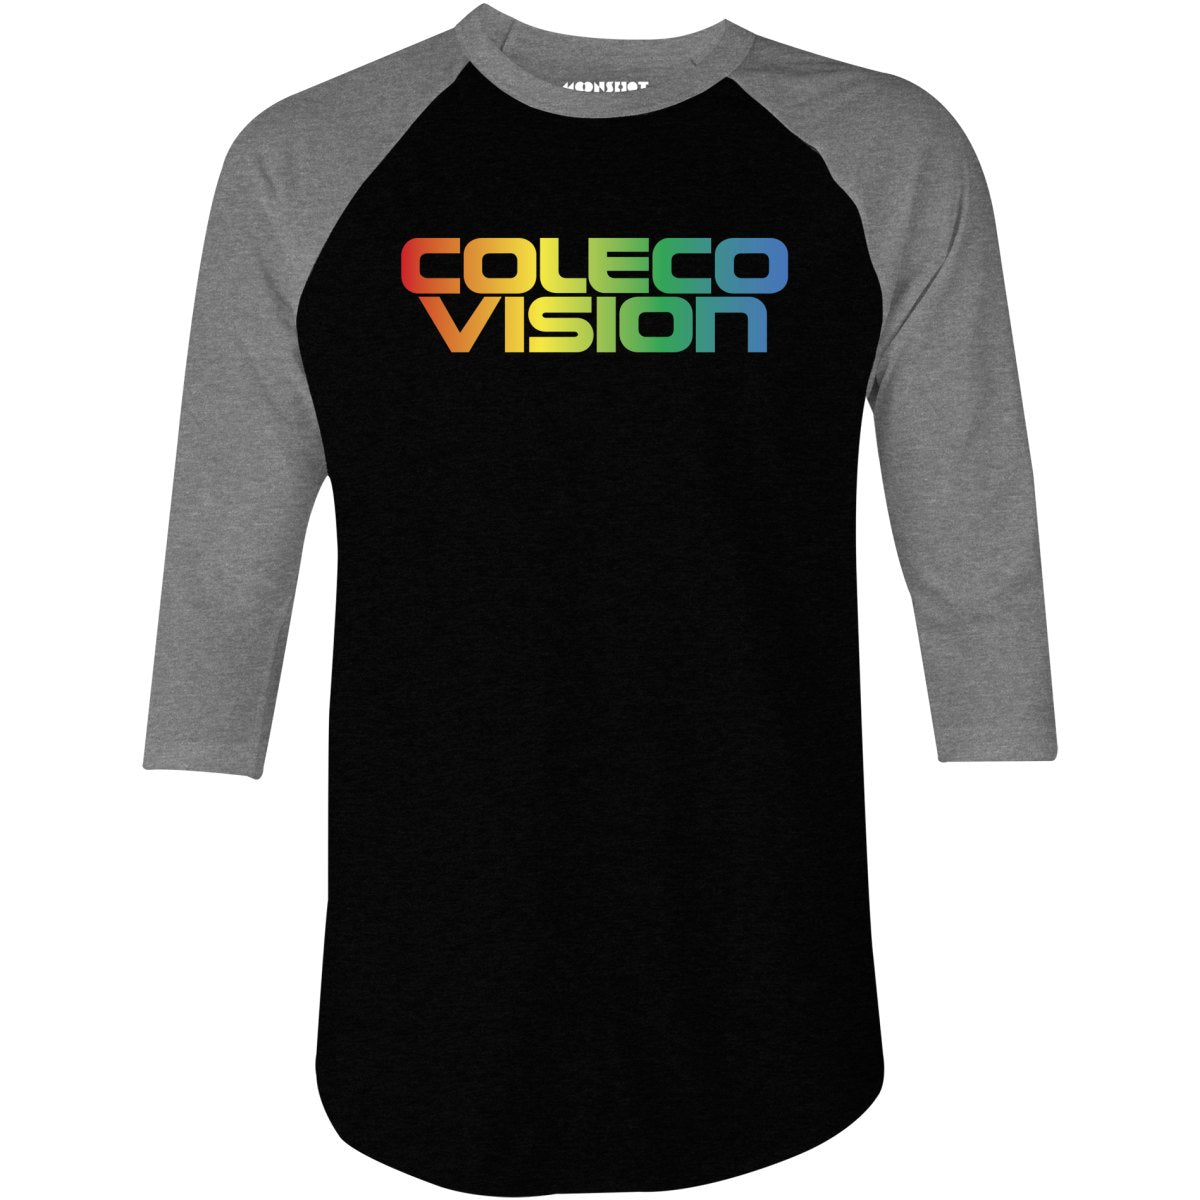 ColecoVision - 3/4 Sleeve Raglan T-Shirt